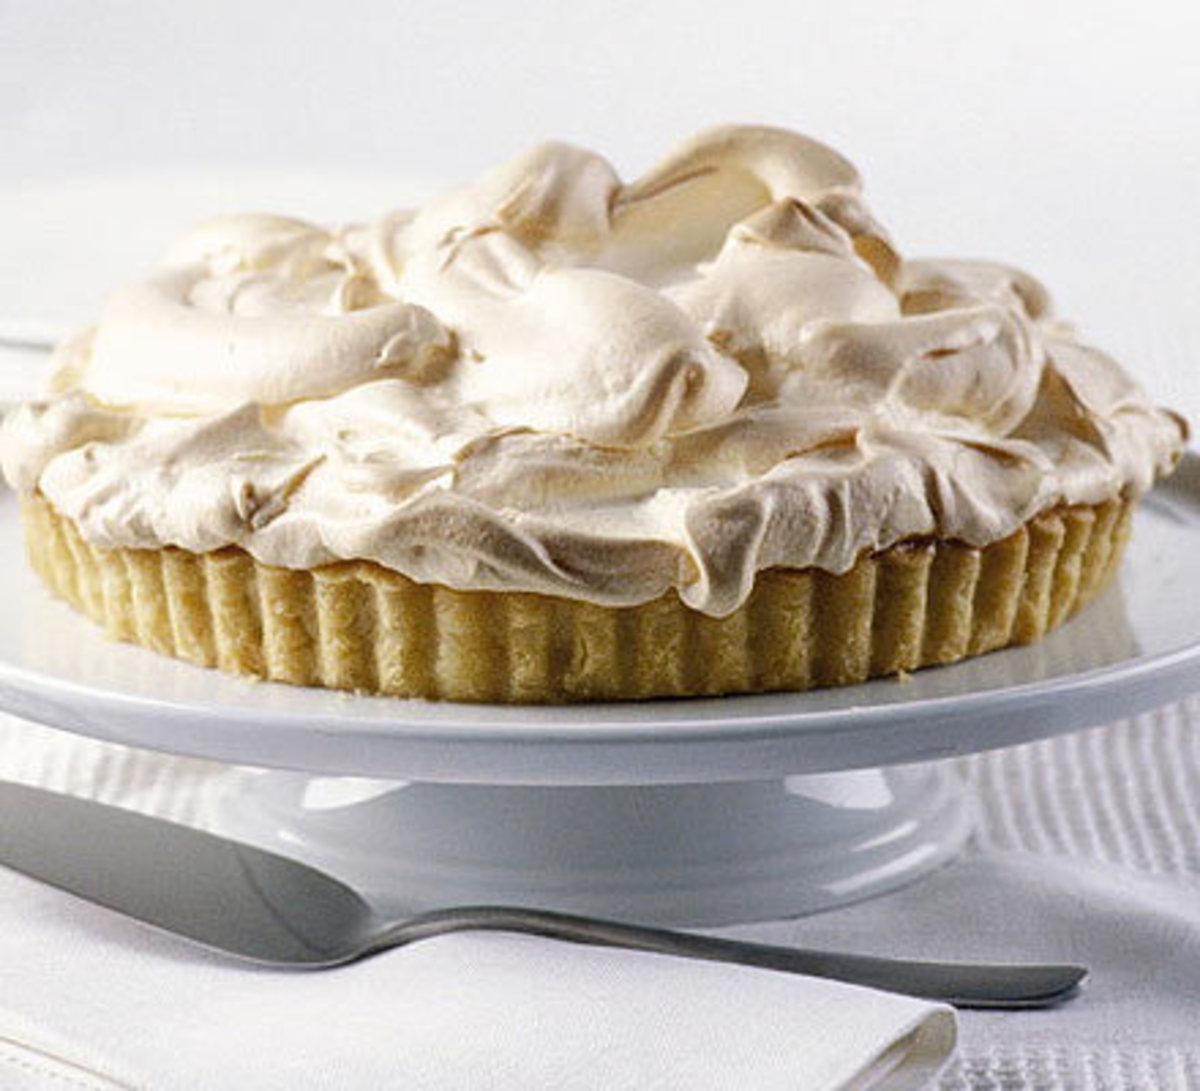 How to make a perfect lemon meringue pie